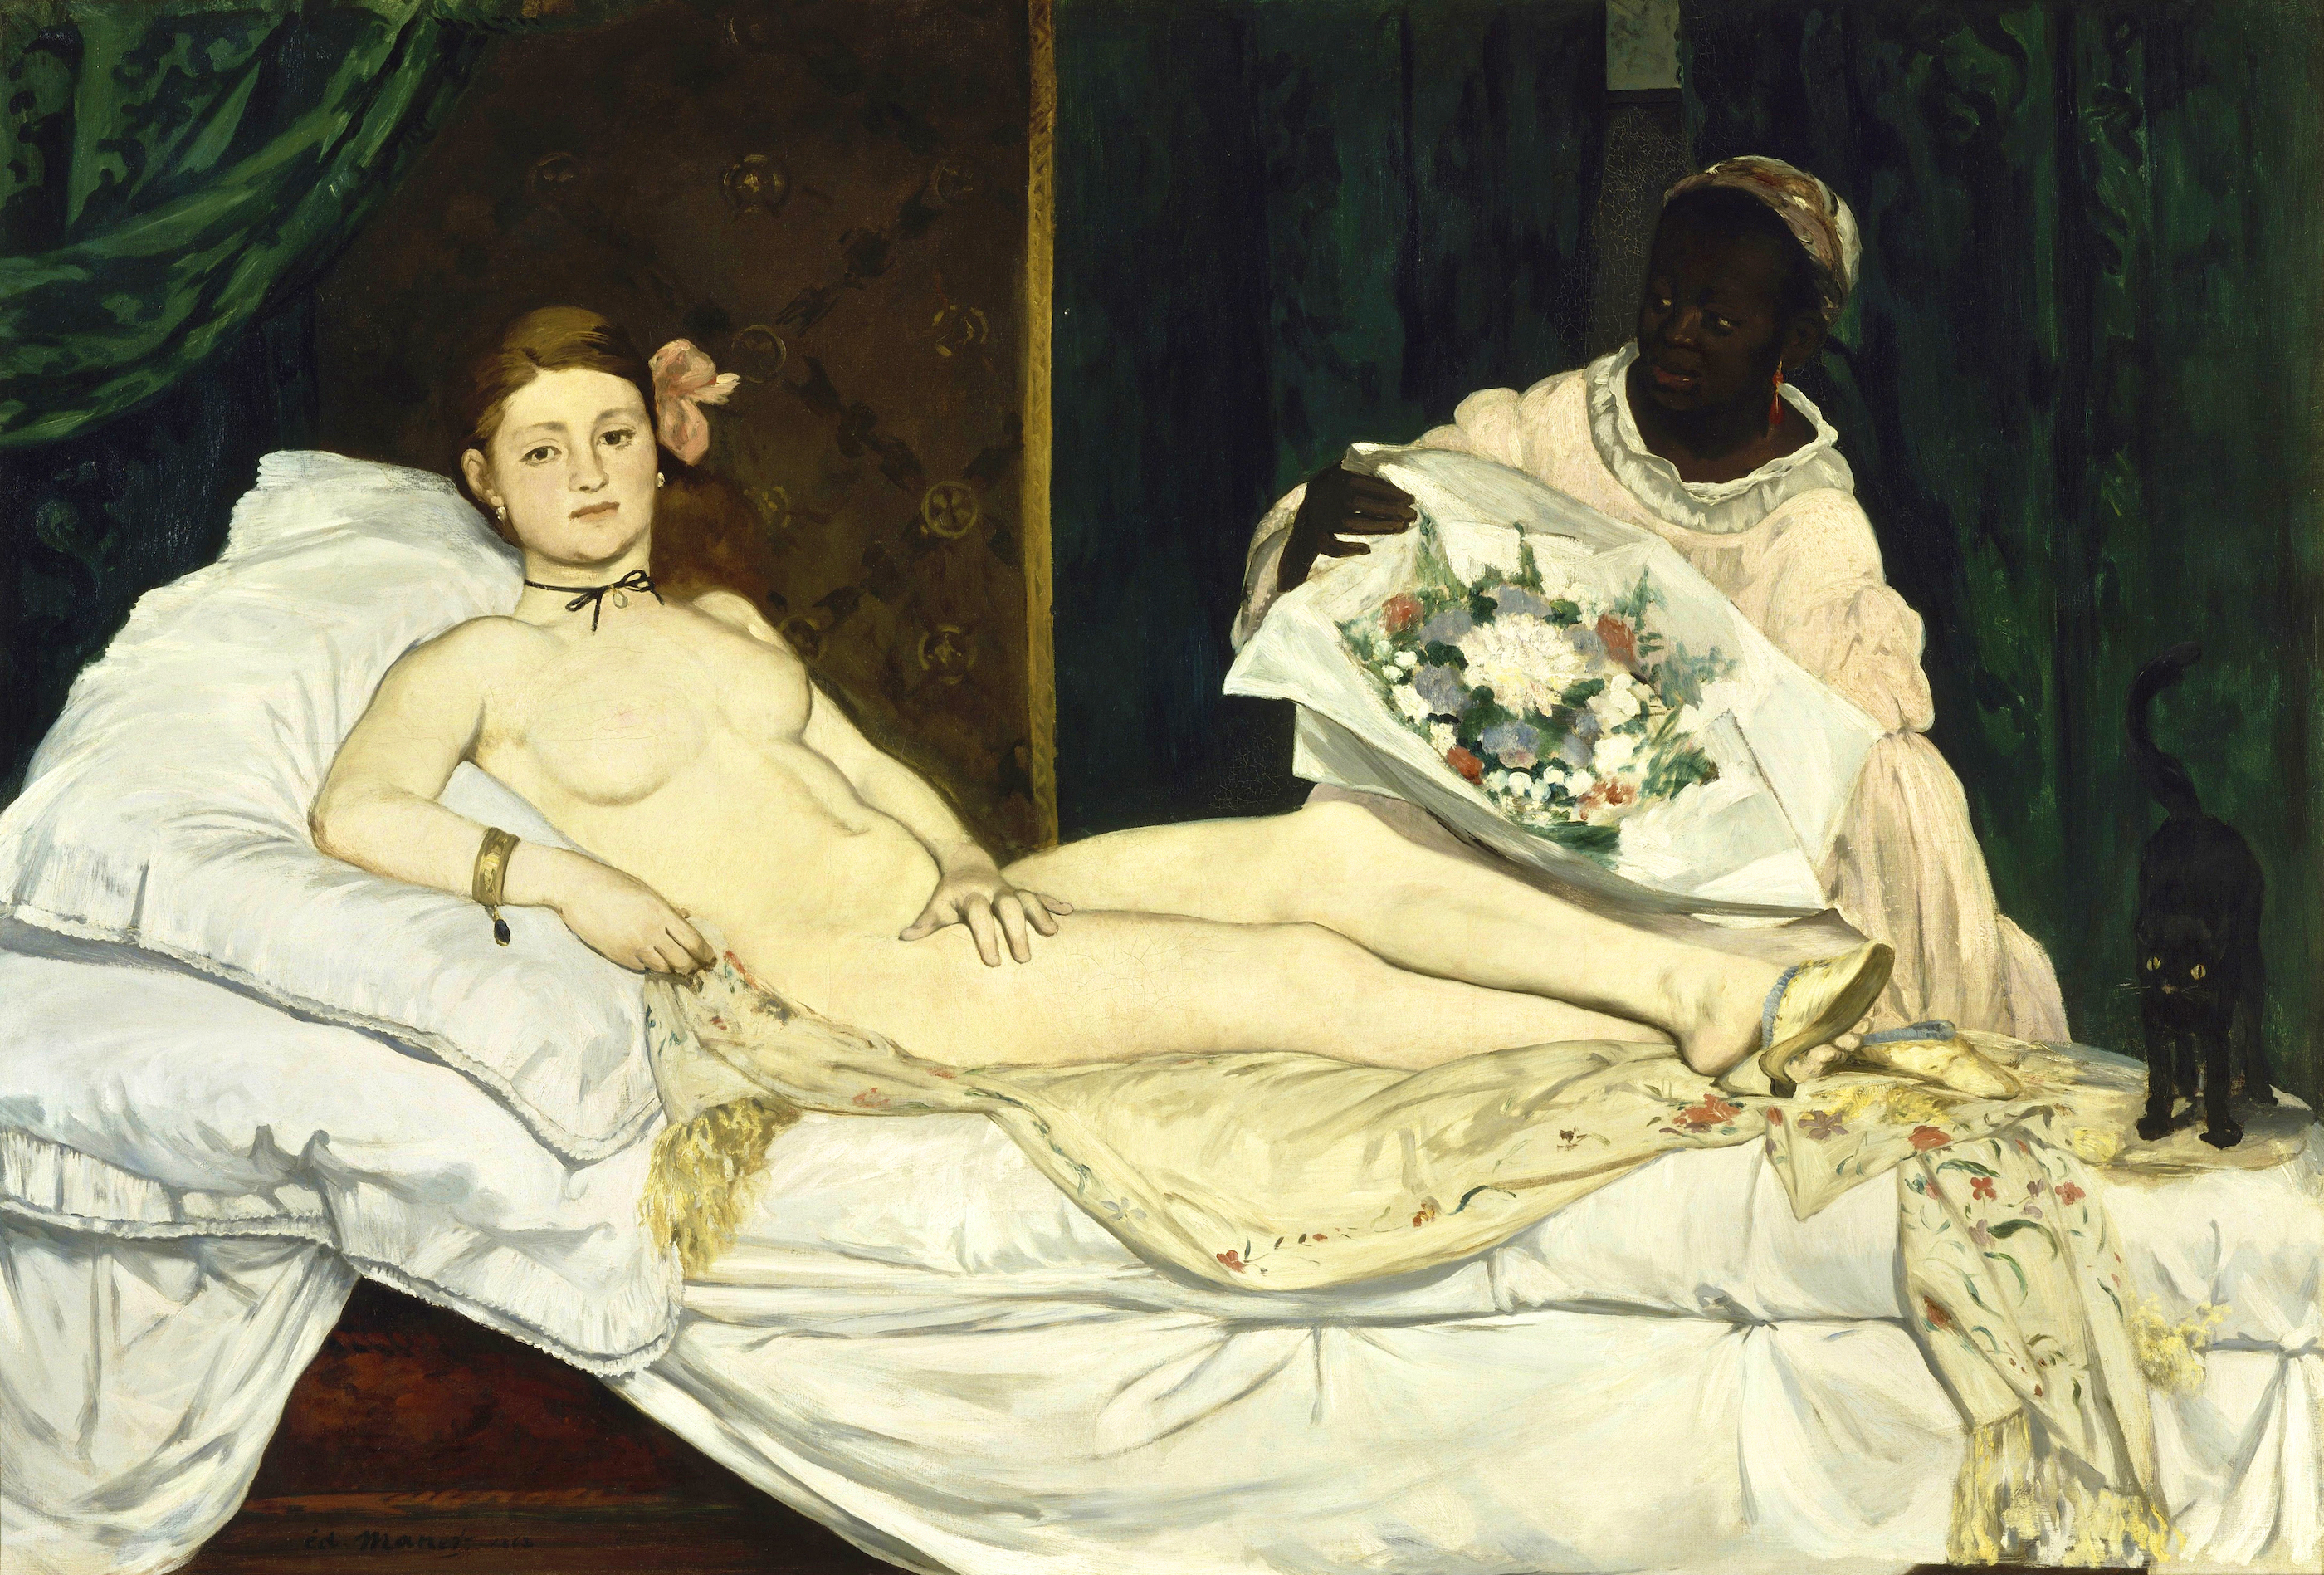 Olímpia by Édouard Manet - 1863 - 130 x 190 cm Musée d'Orsay